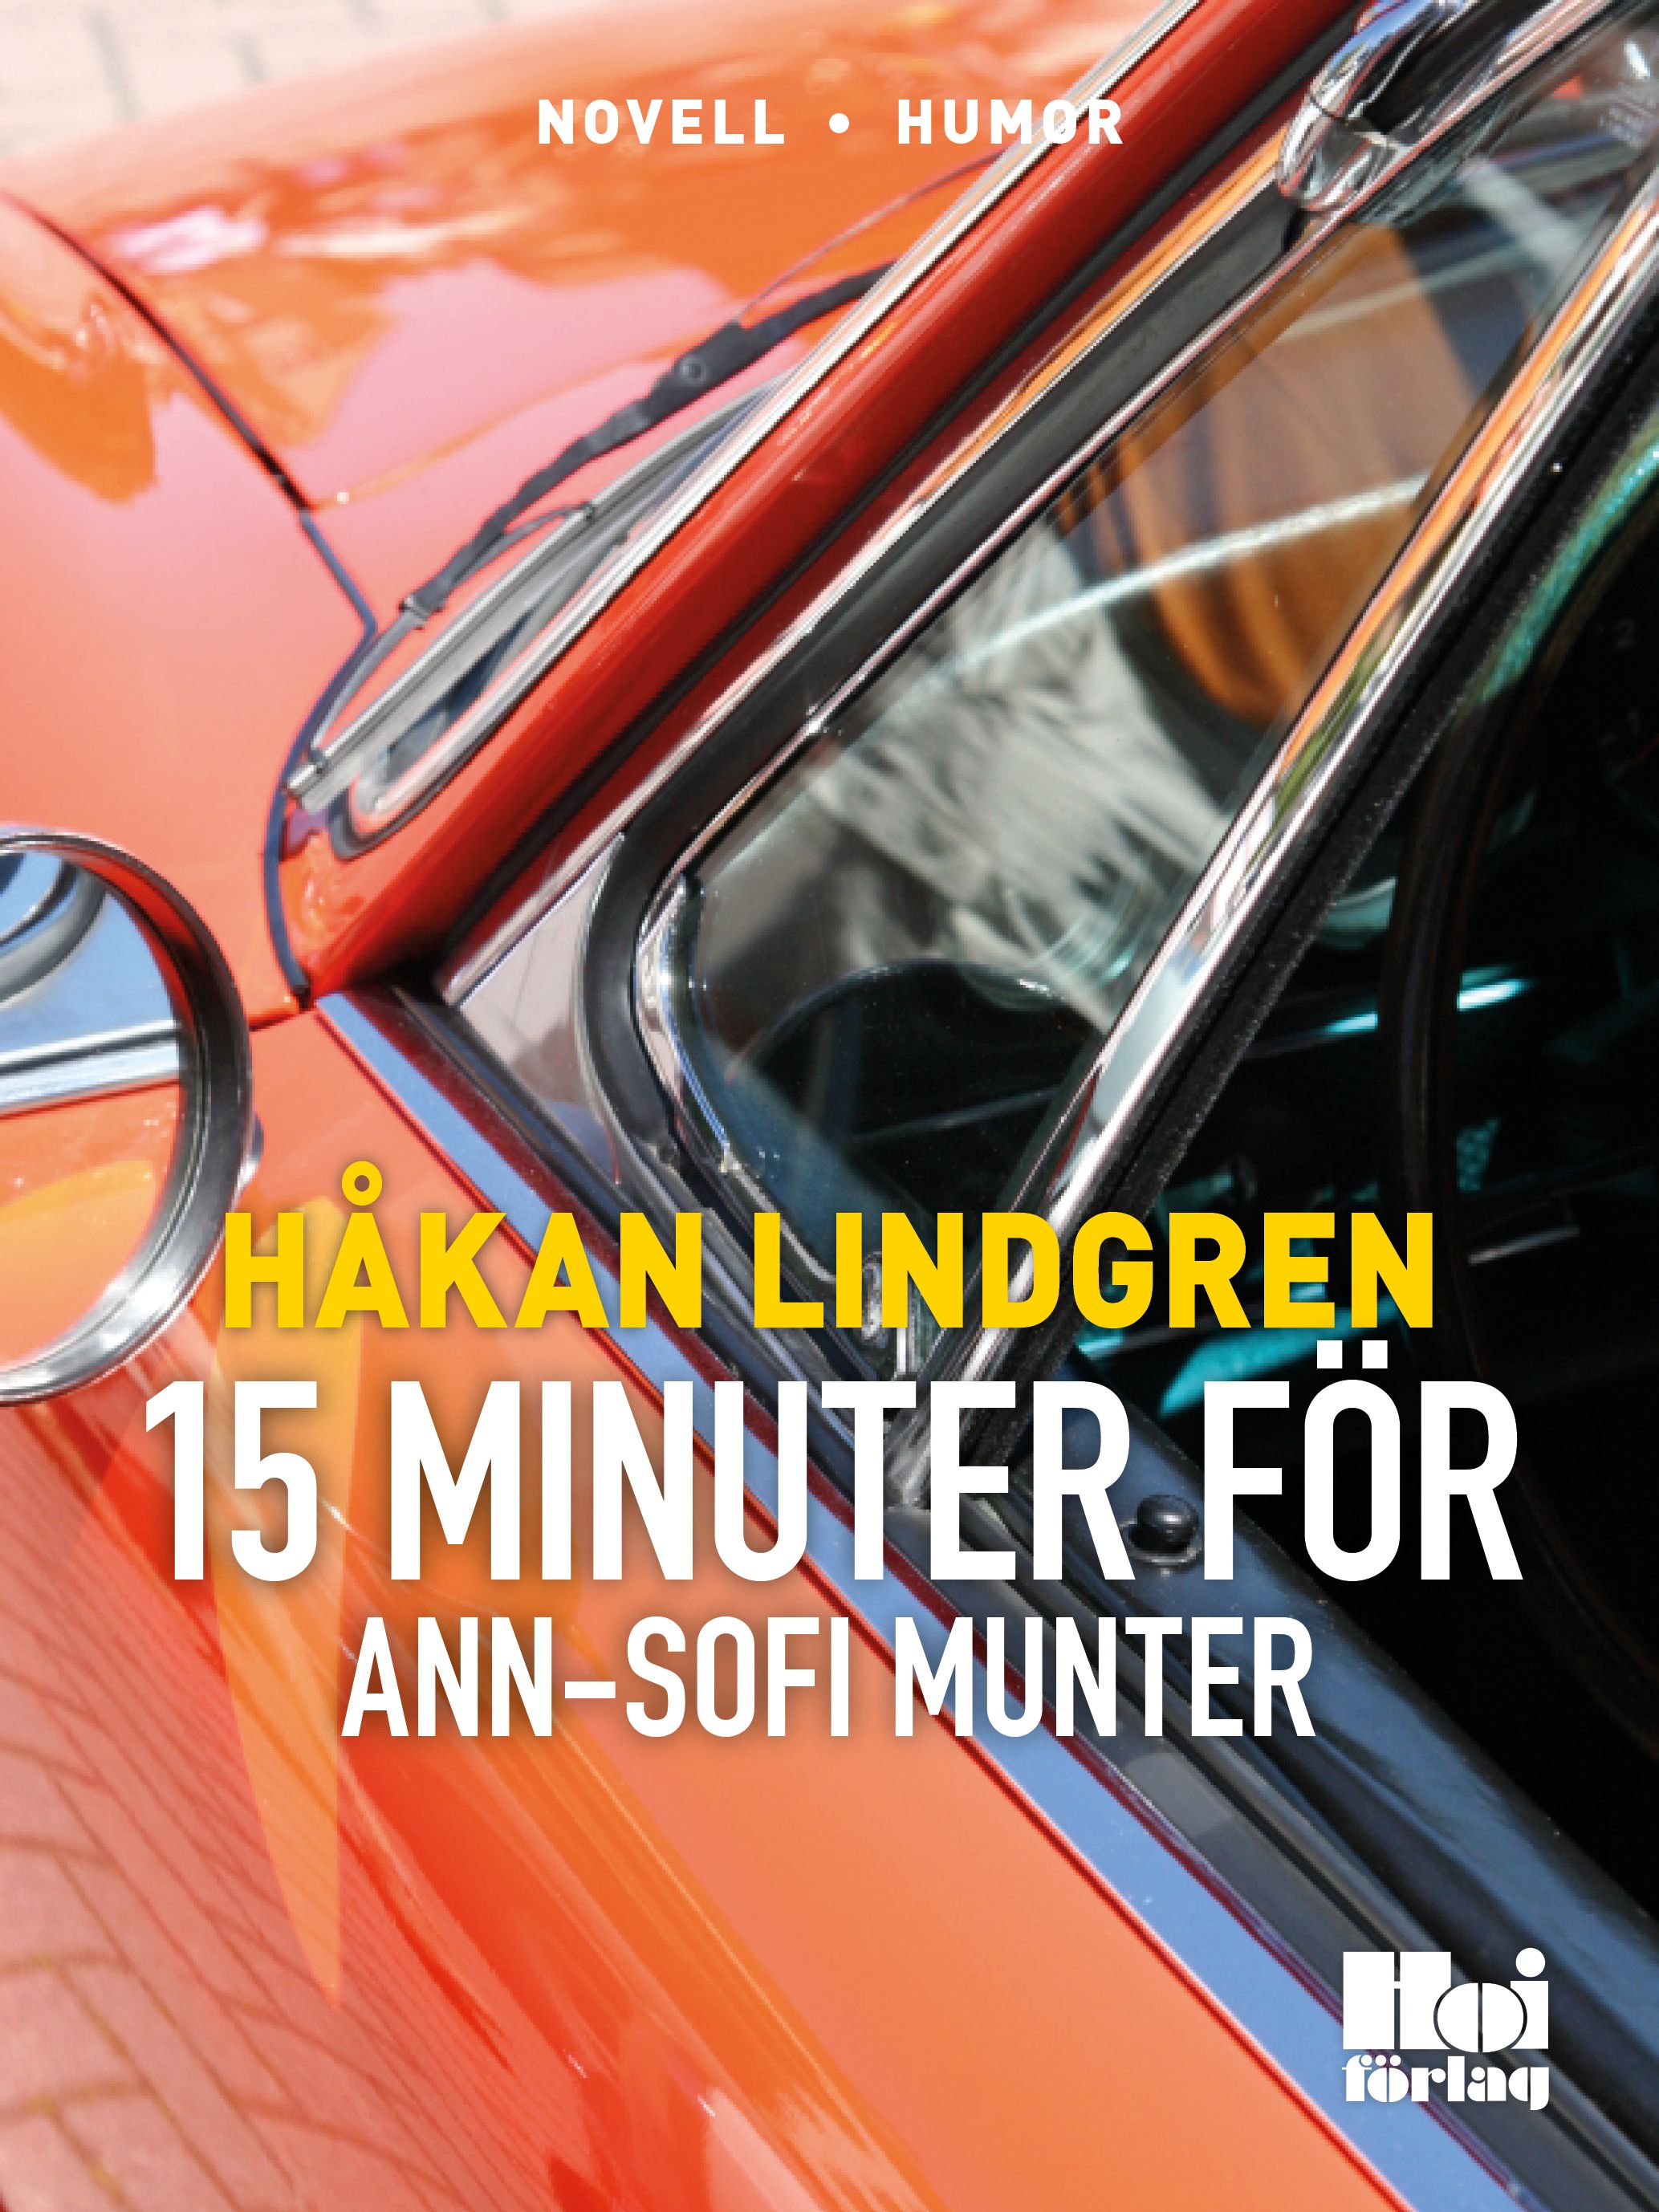 Femton minuter för Ann-Sofie Munter, e-bog af Håkan Lindgren